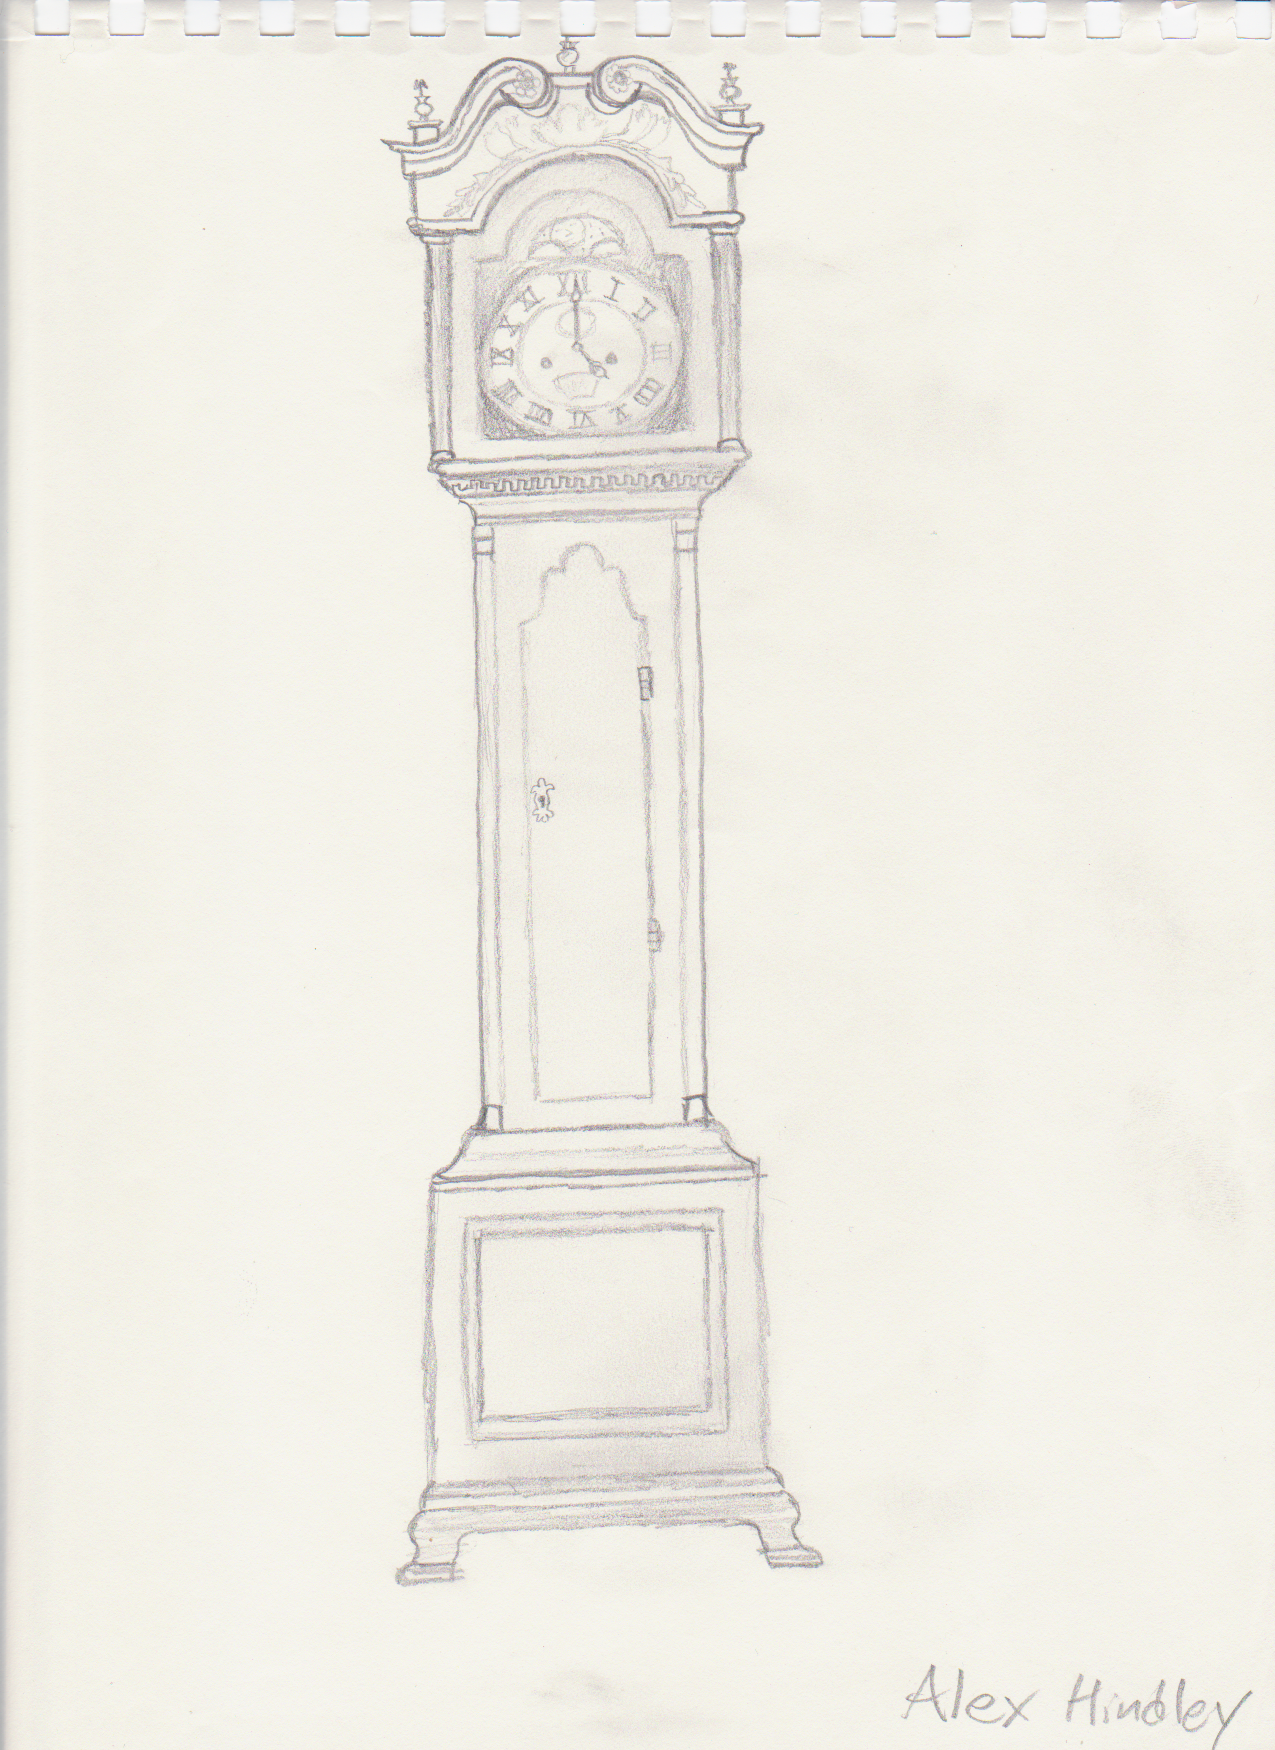 Grandfather Clock by Ash243x on DeviantArt